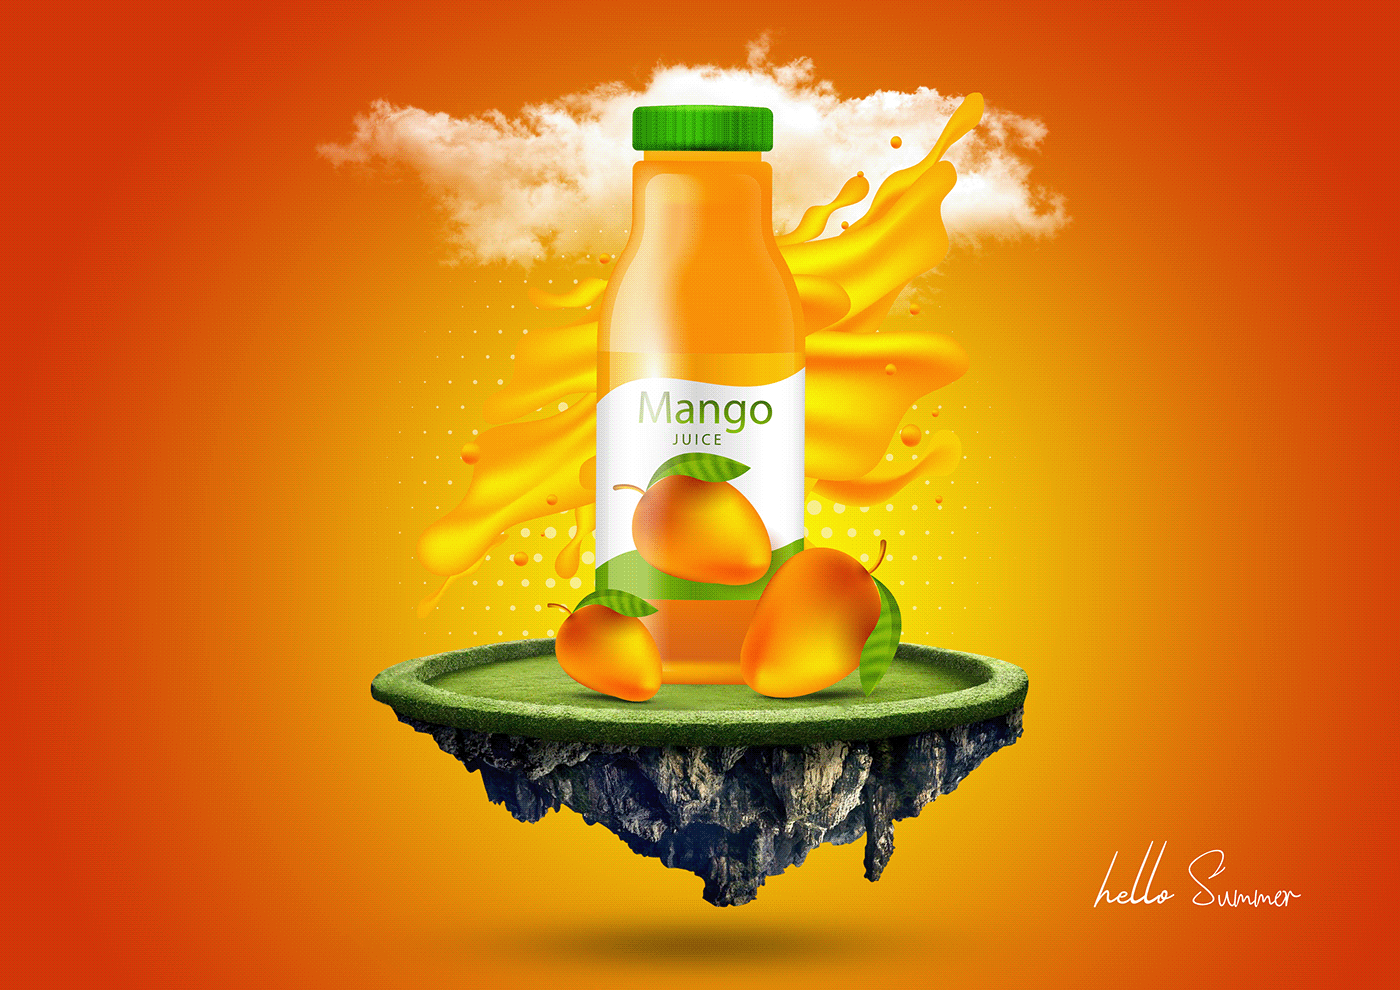 Mango Juice Poster Design. 